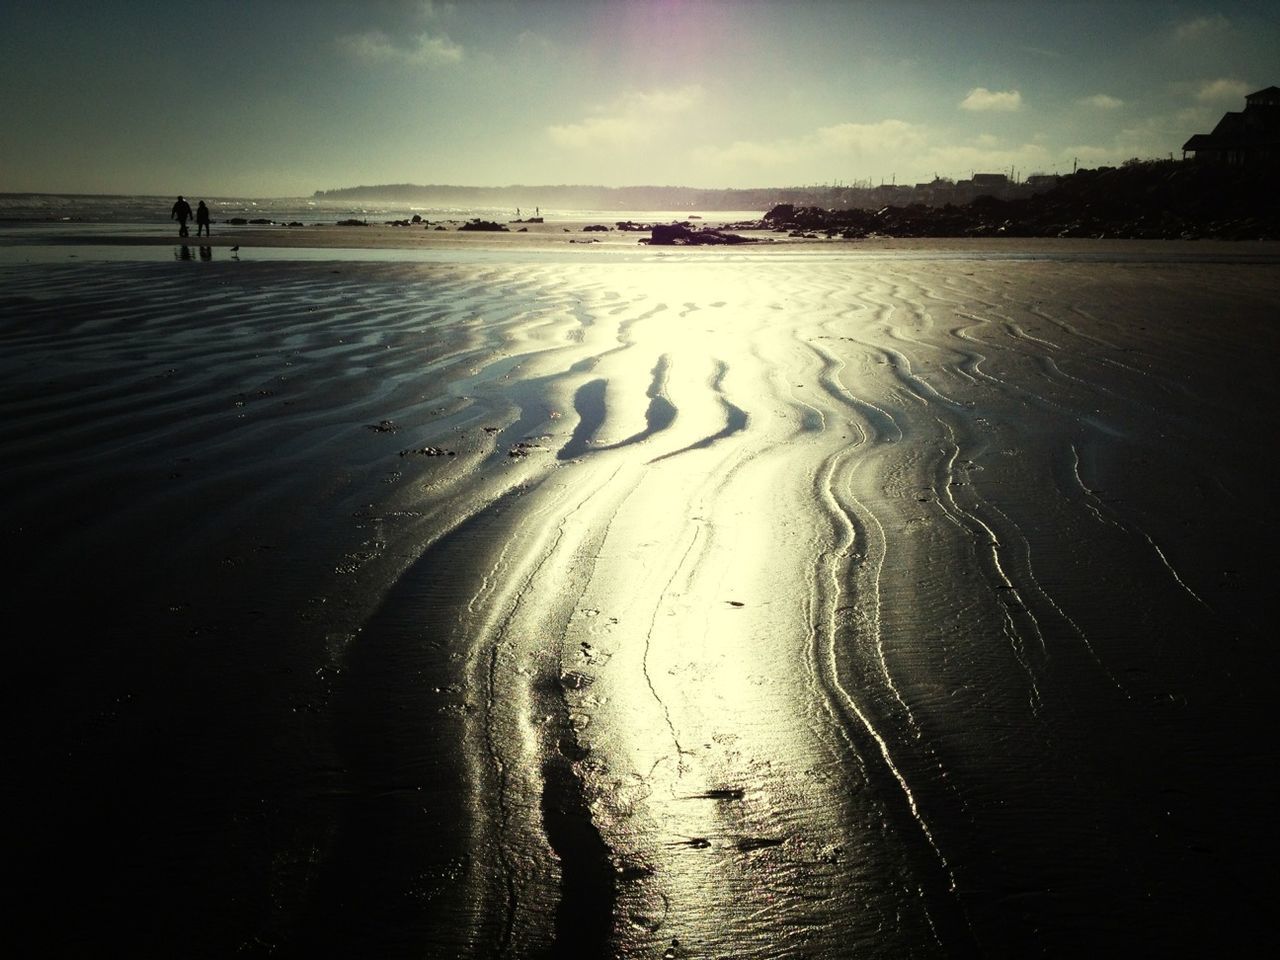 Wet sand at beach